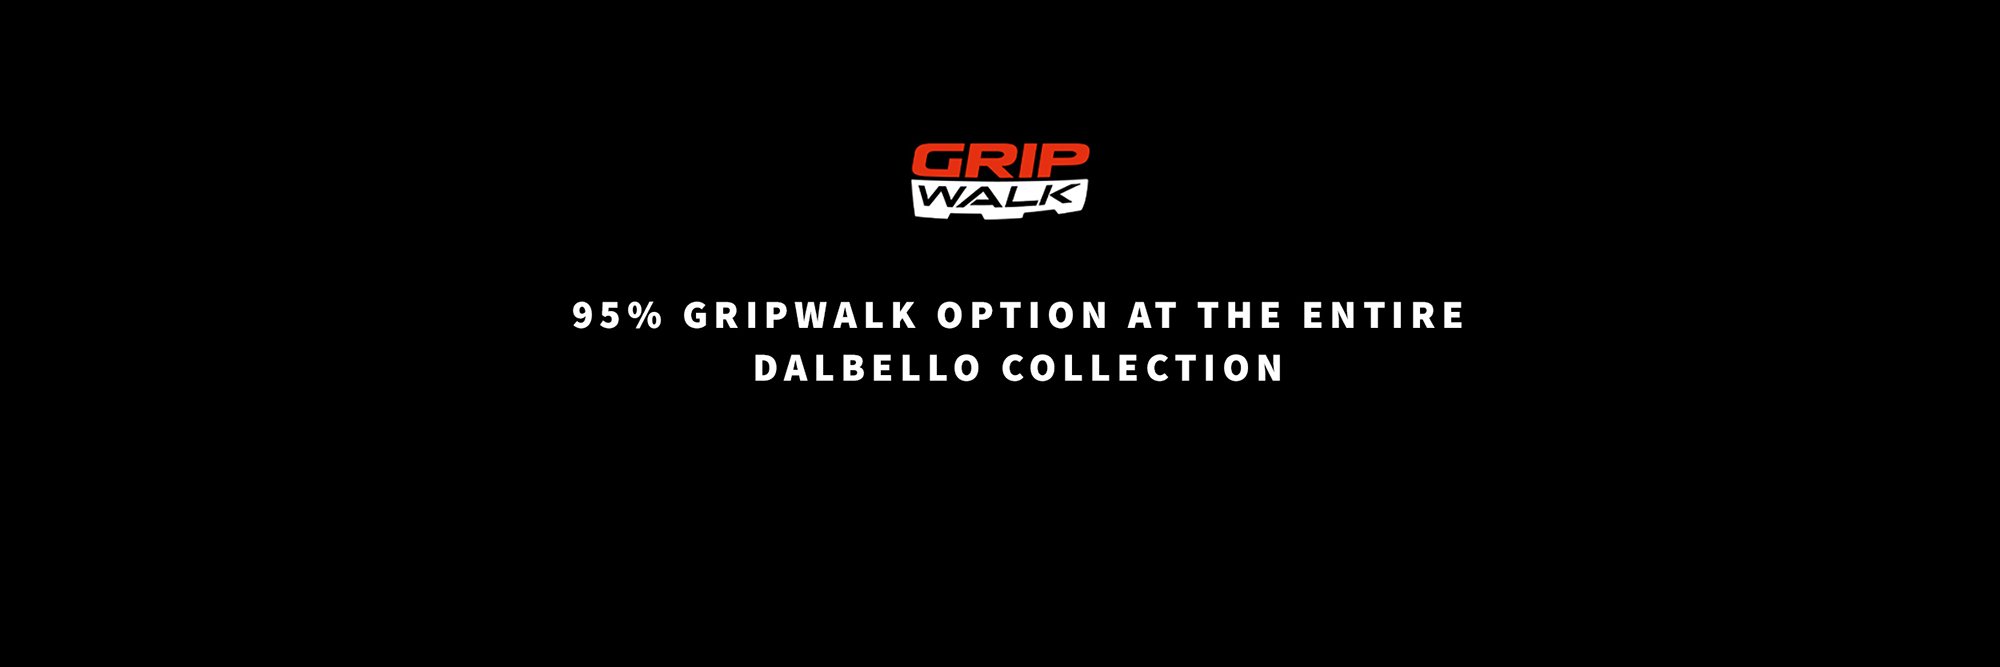 95% Grip Walk option at the entire Dalbello collection